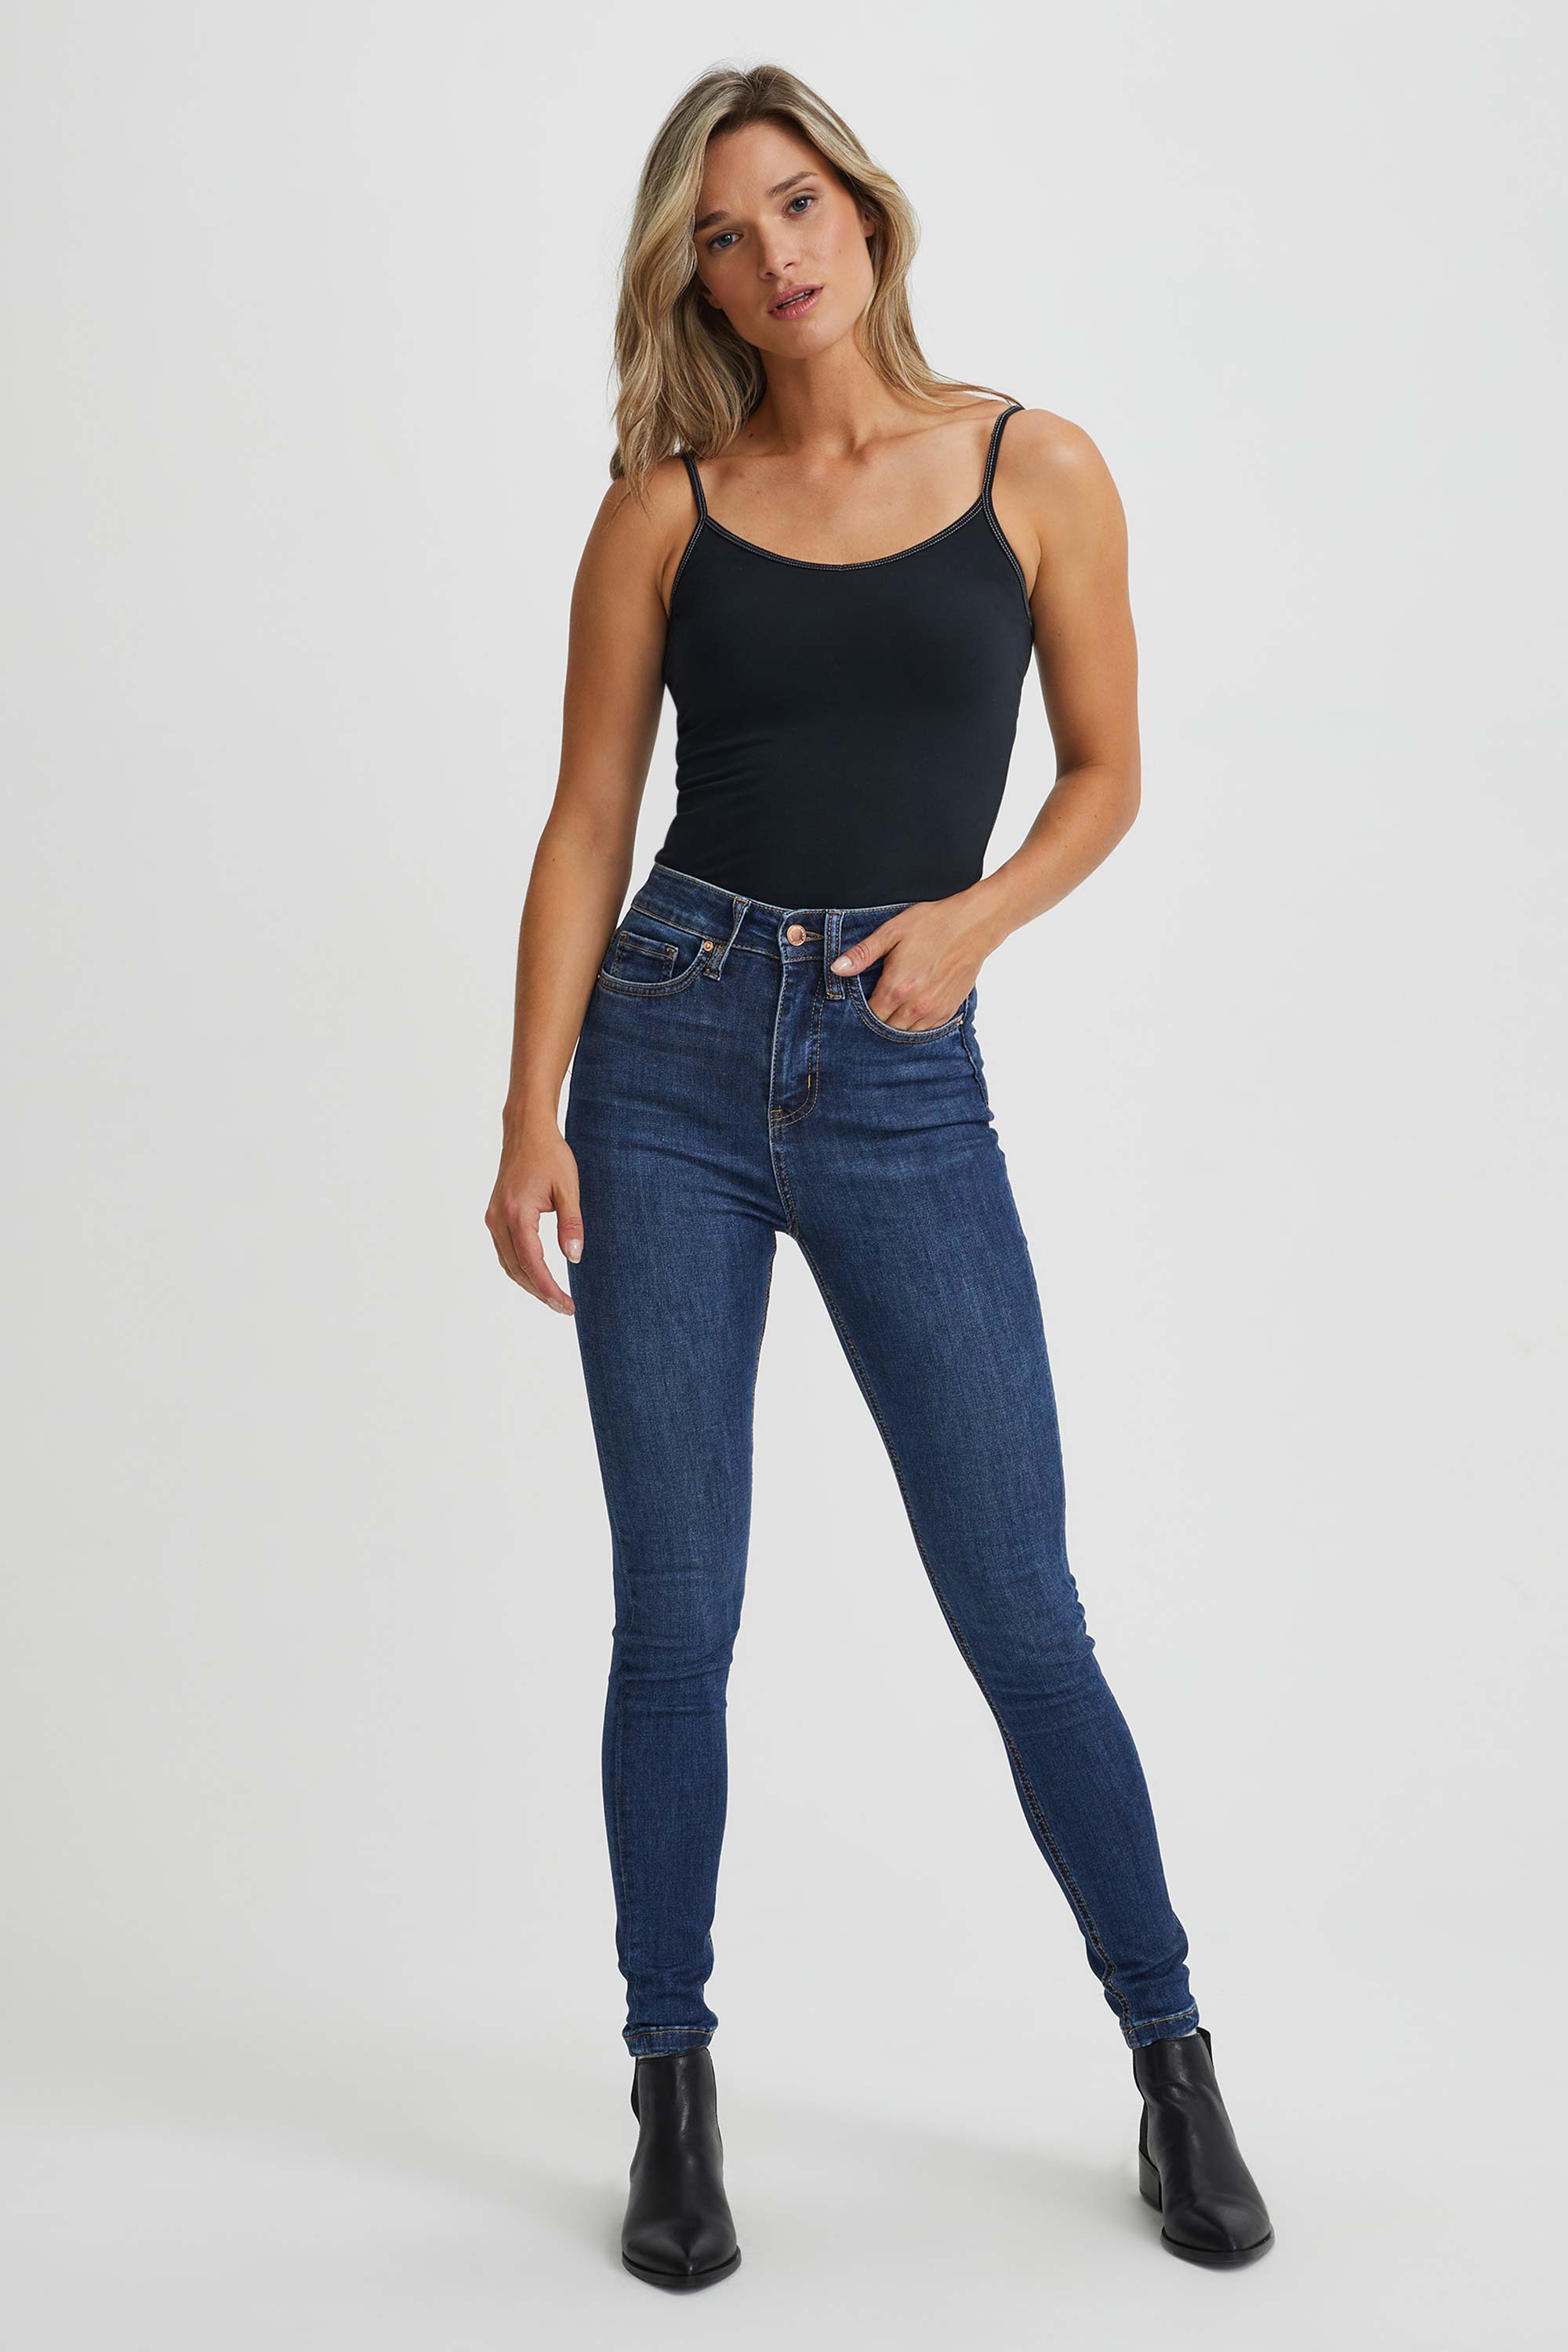 Narrow high-waisted jeans